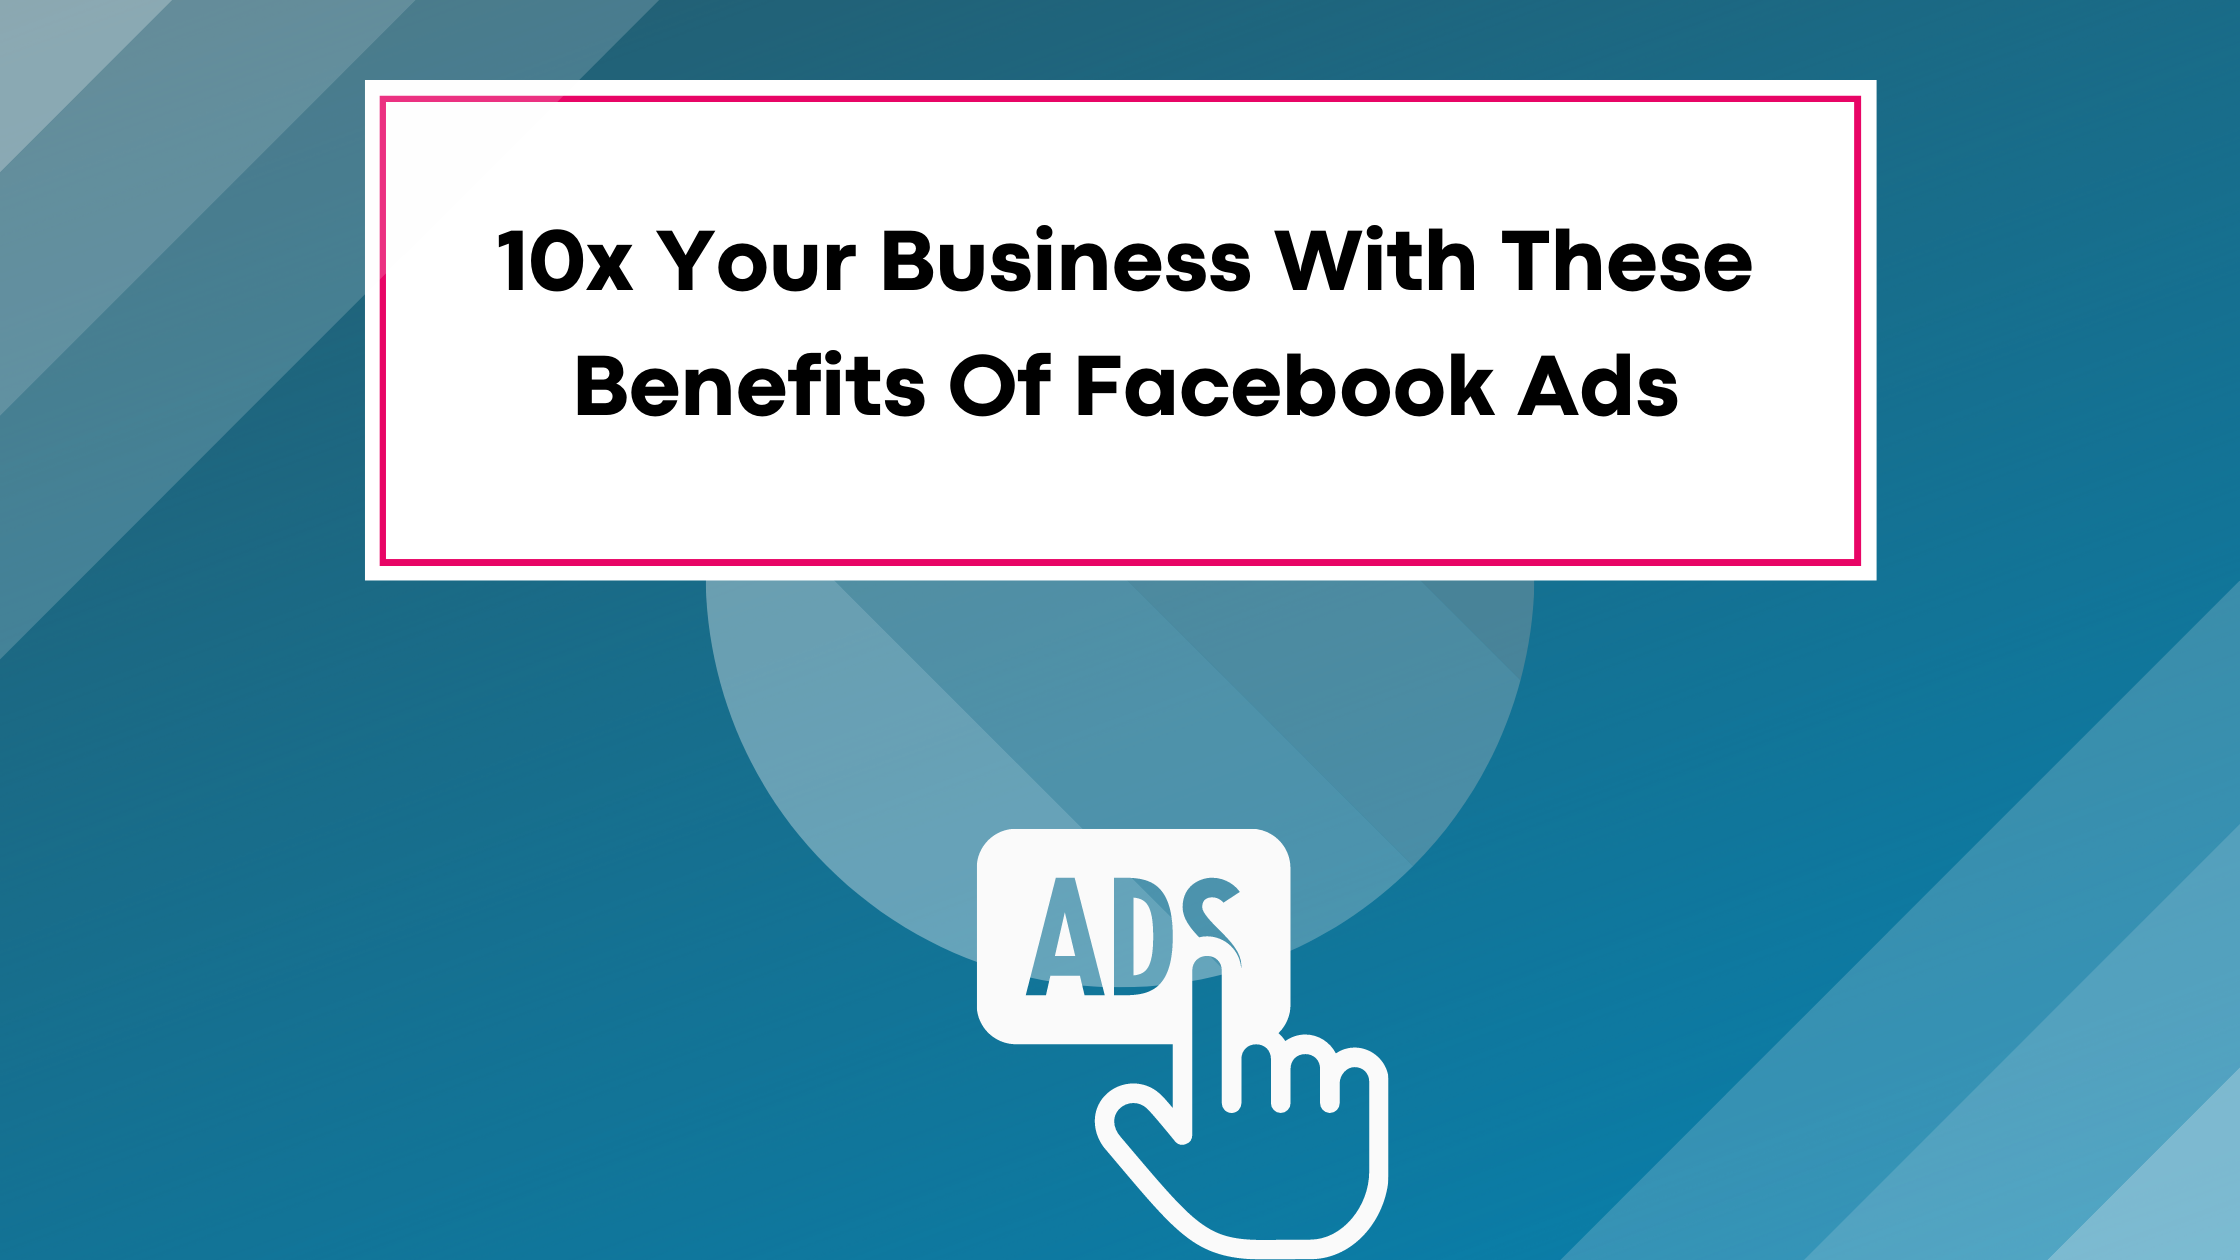 Benefits of Facebook Ads